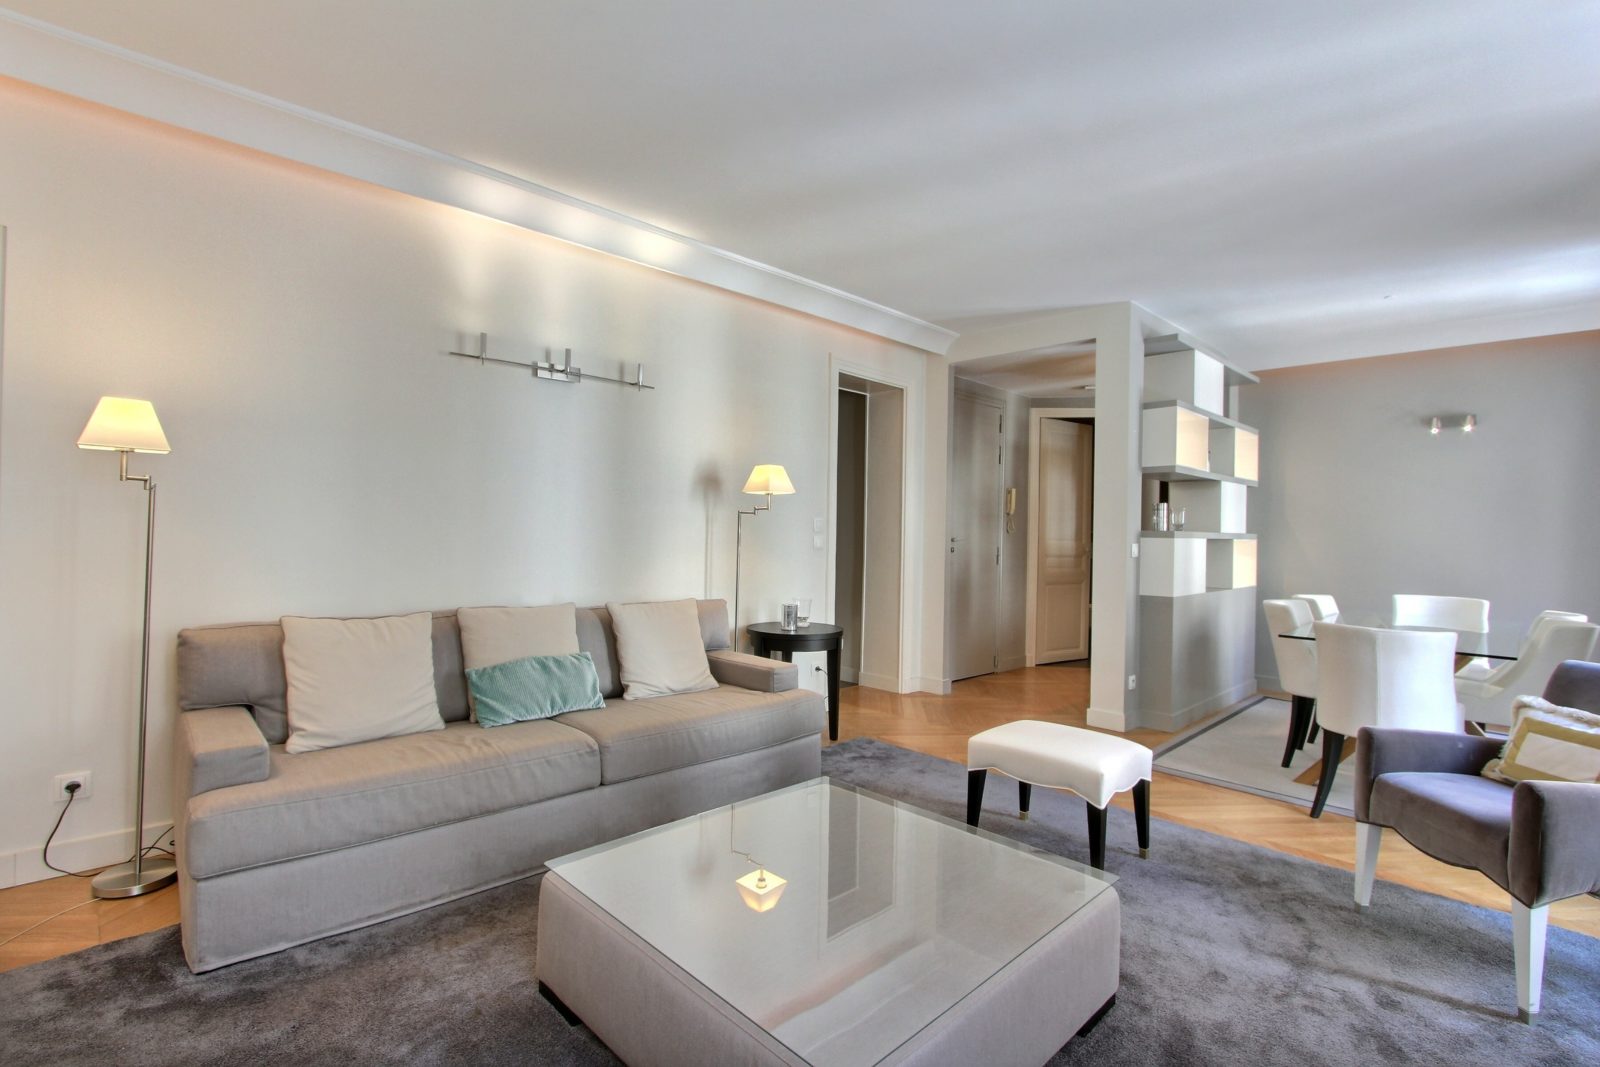 1 bedroom apartment rental in Paris, Boulevard du Montparnasse